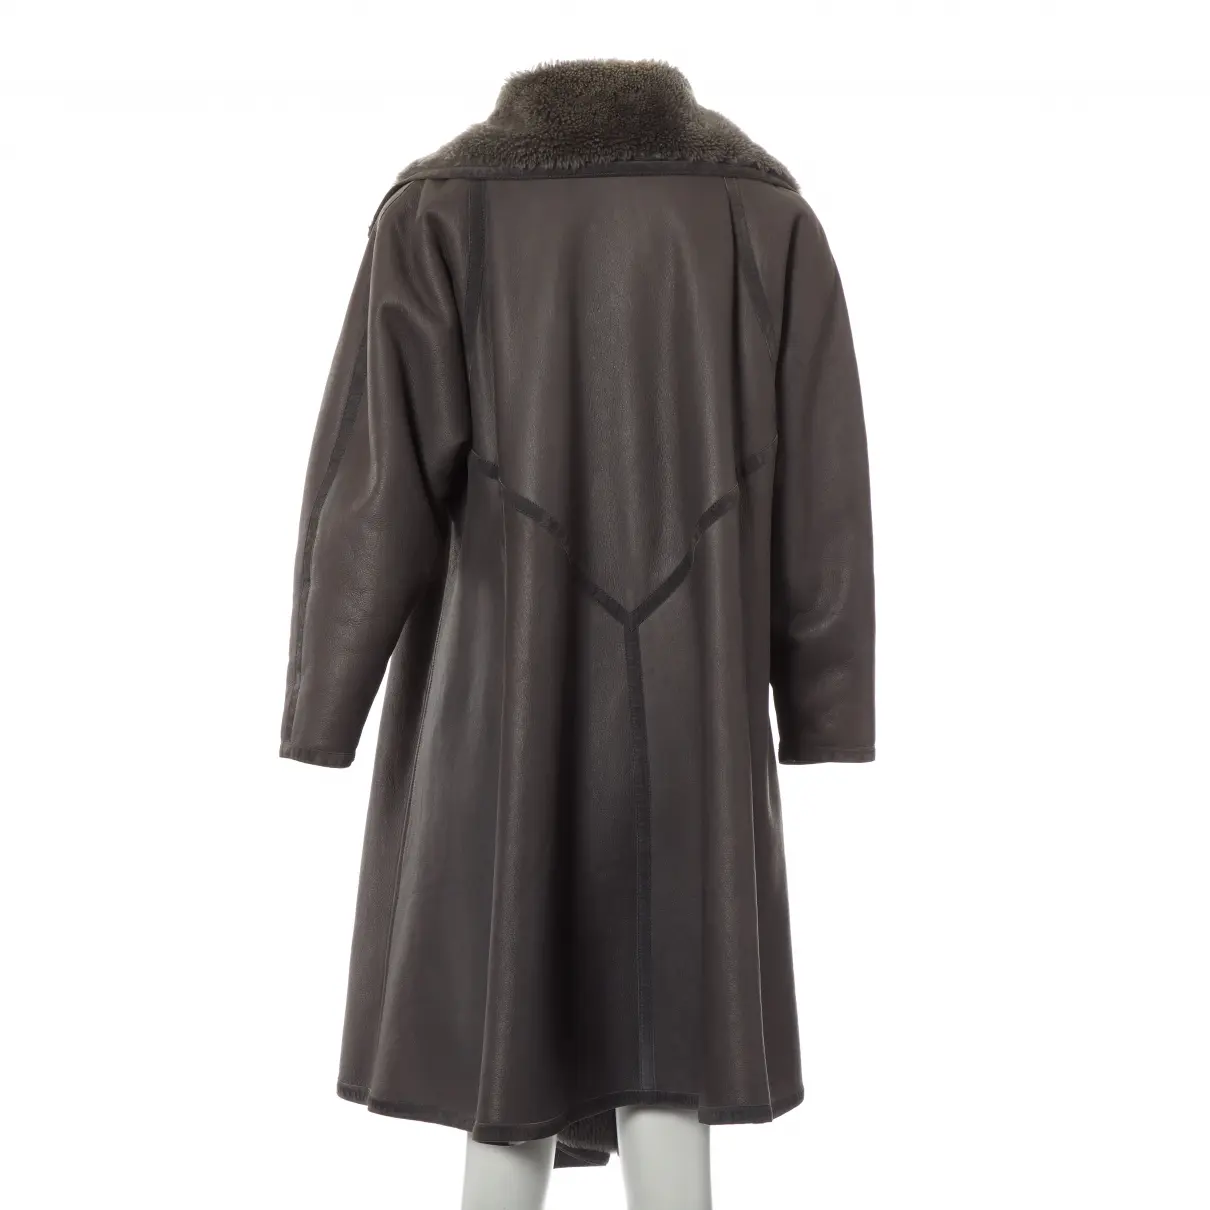 Buy Charles Jourdan Leather coat online